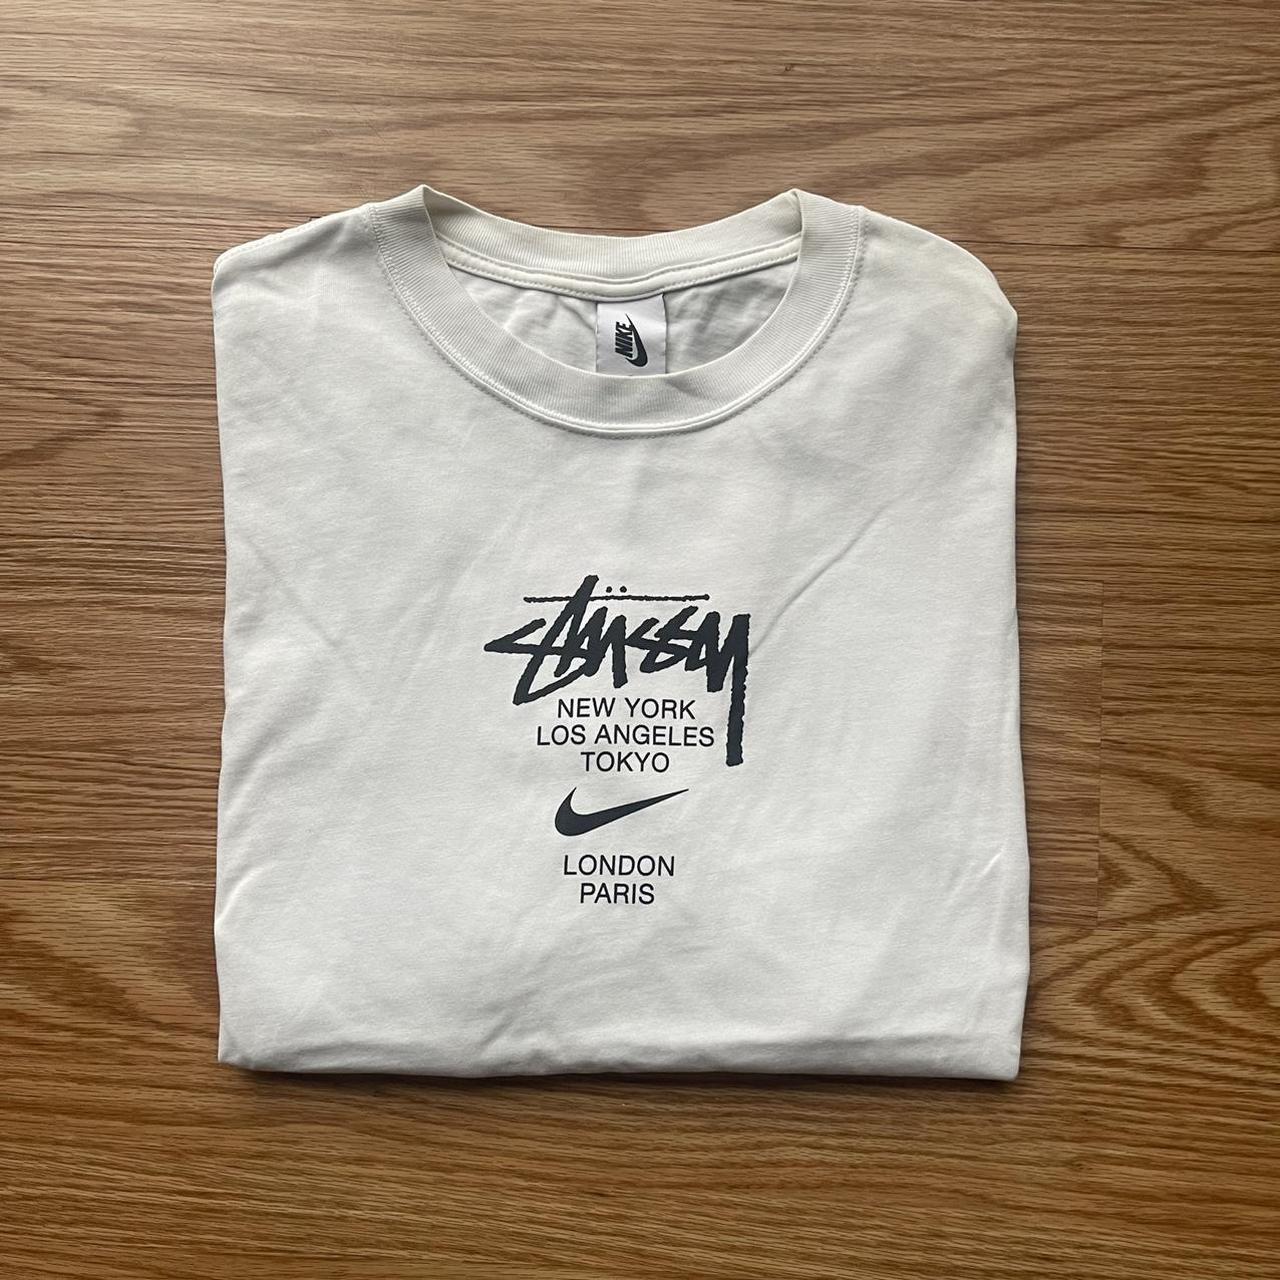 Stussy x Nike tshirt Size XL Small yellow stain on... - Depop